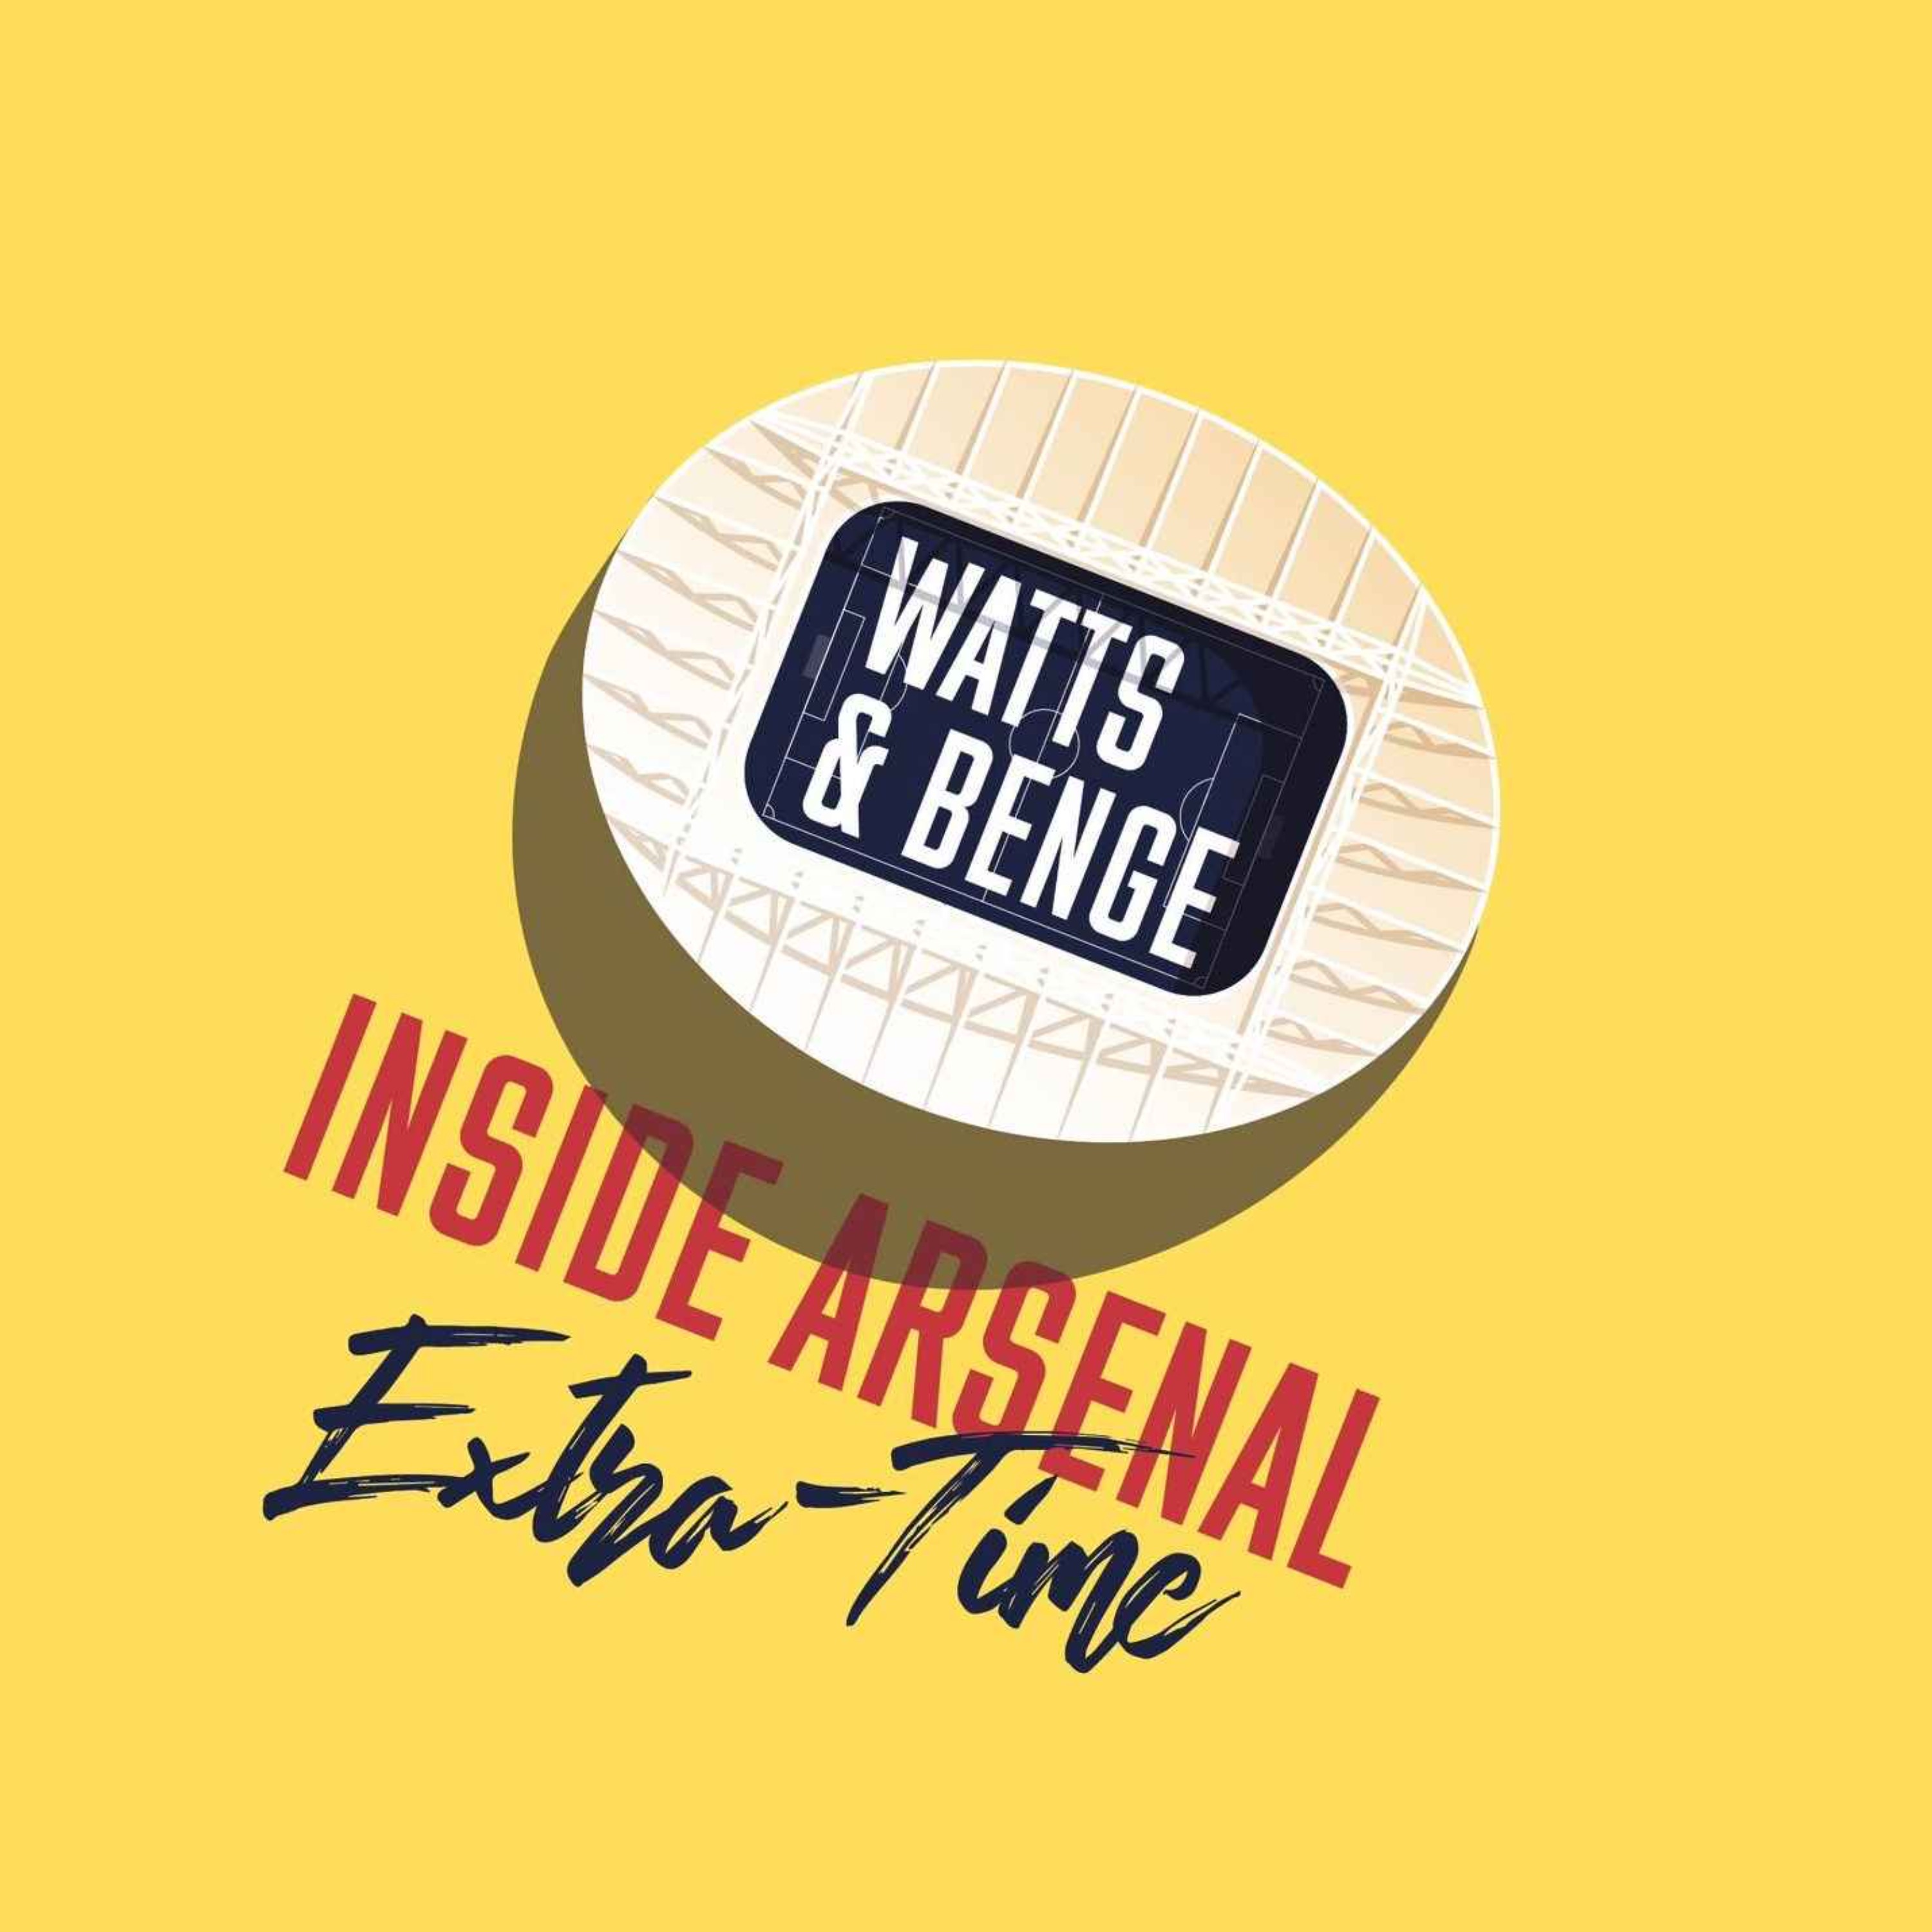 Extra-time with James Benge - Who starts vs West Ham | Tomiyasu's return + Lokonga's future